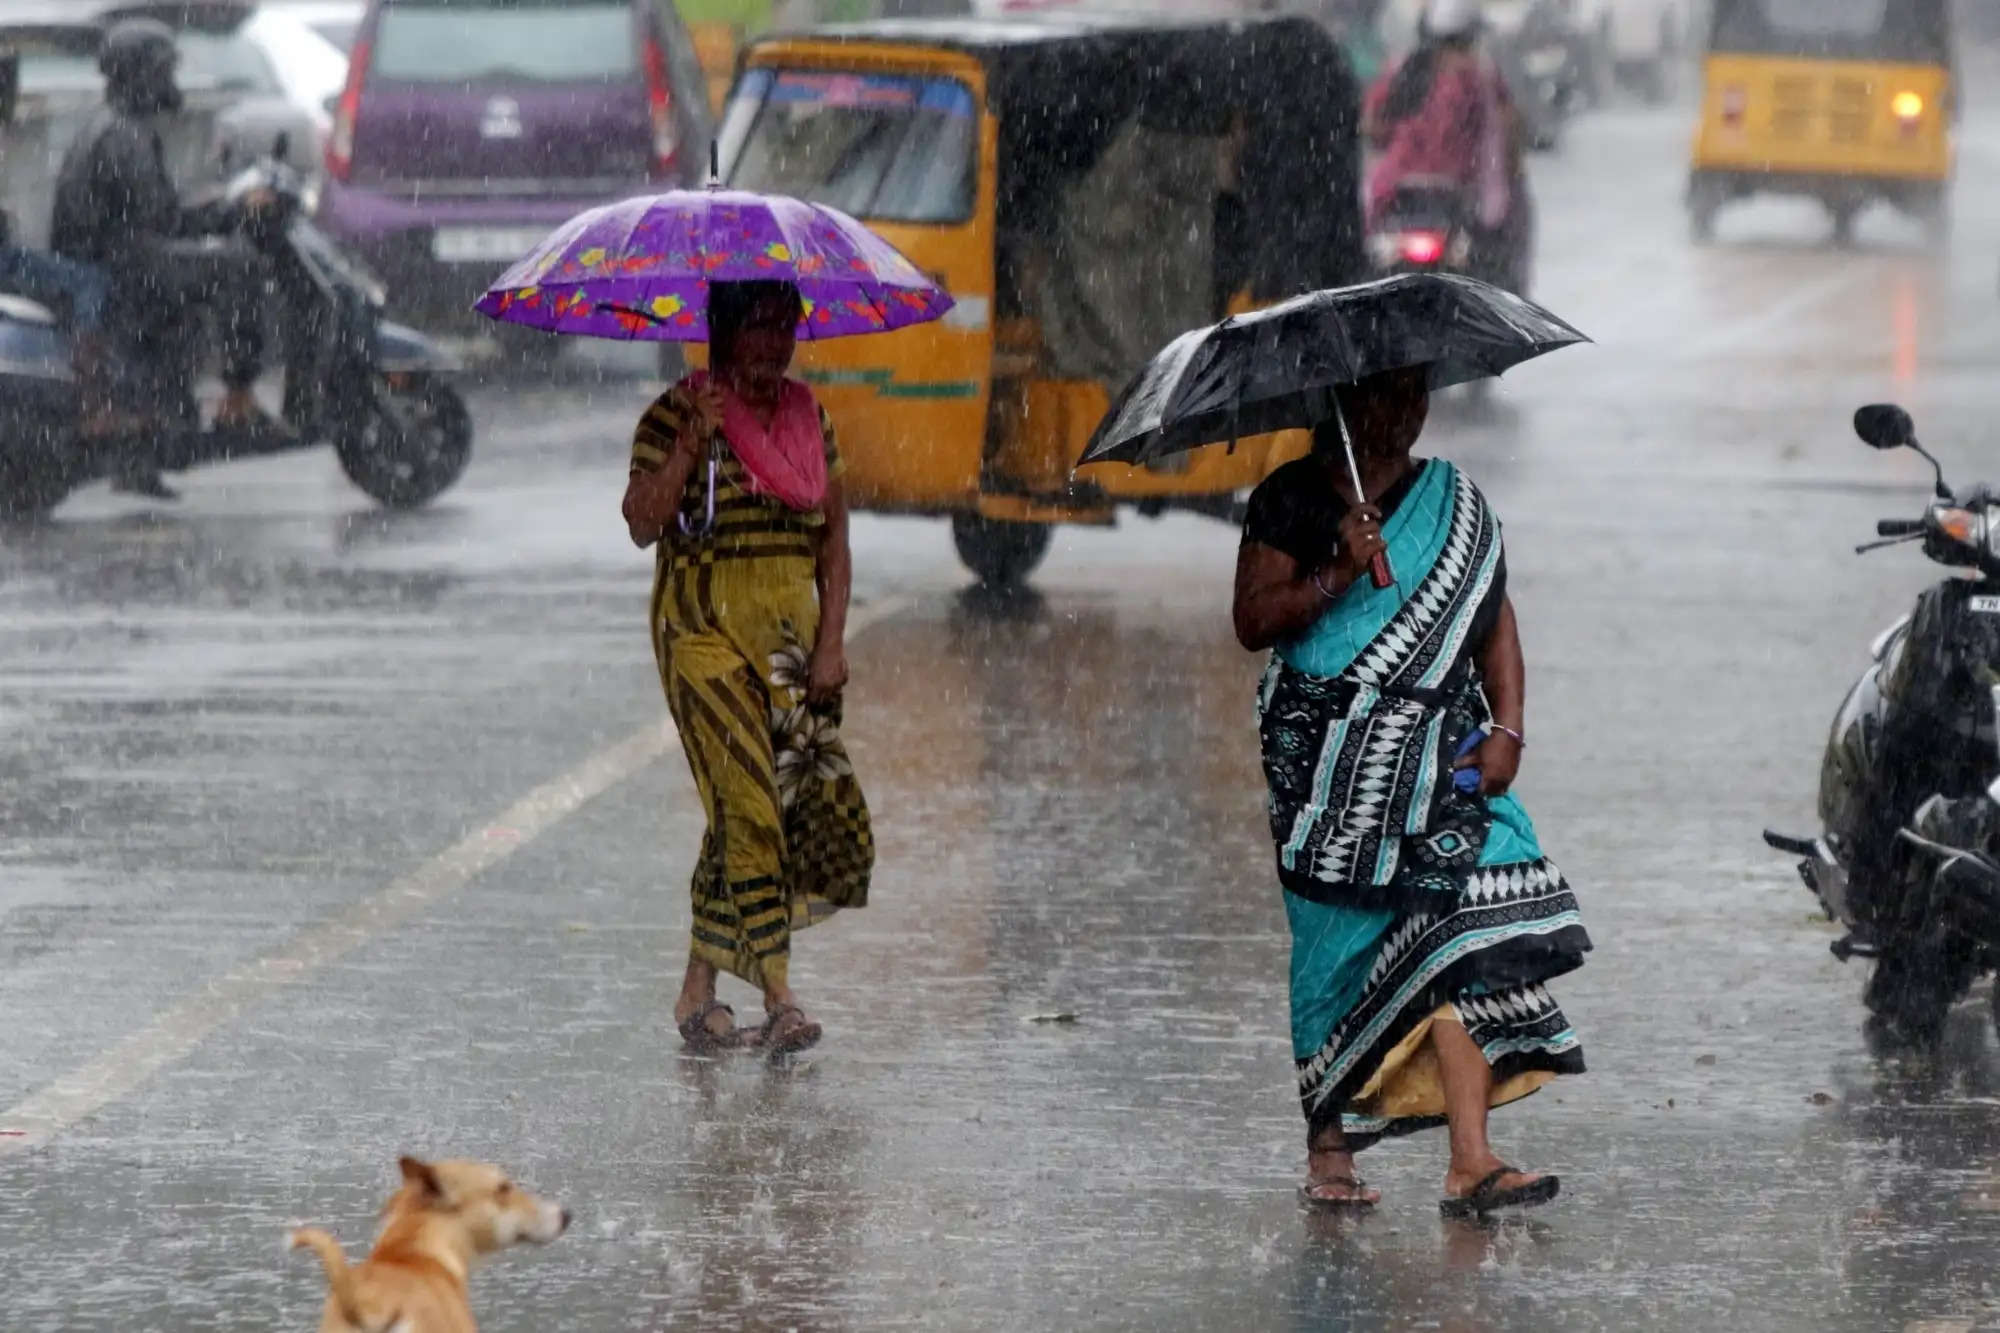 Two Women walked in rain with umbrella